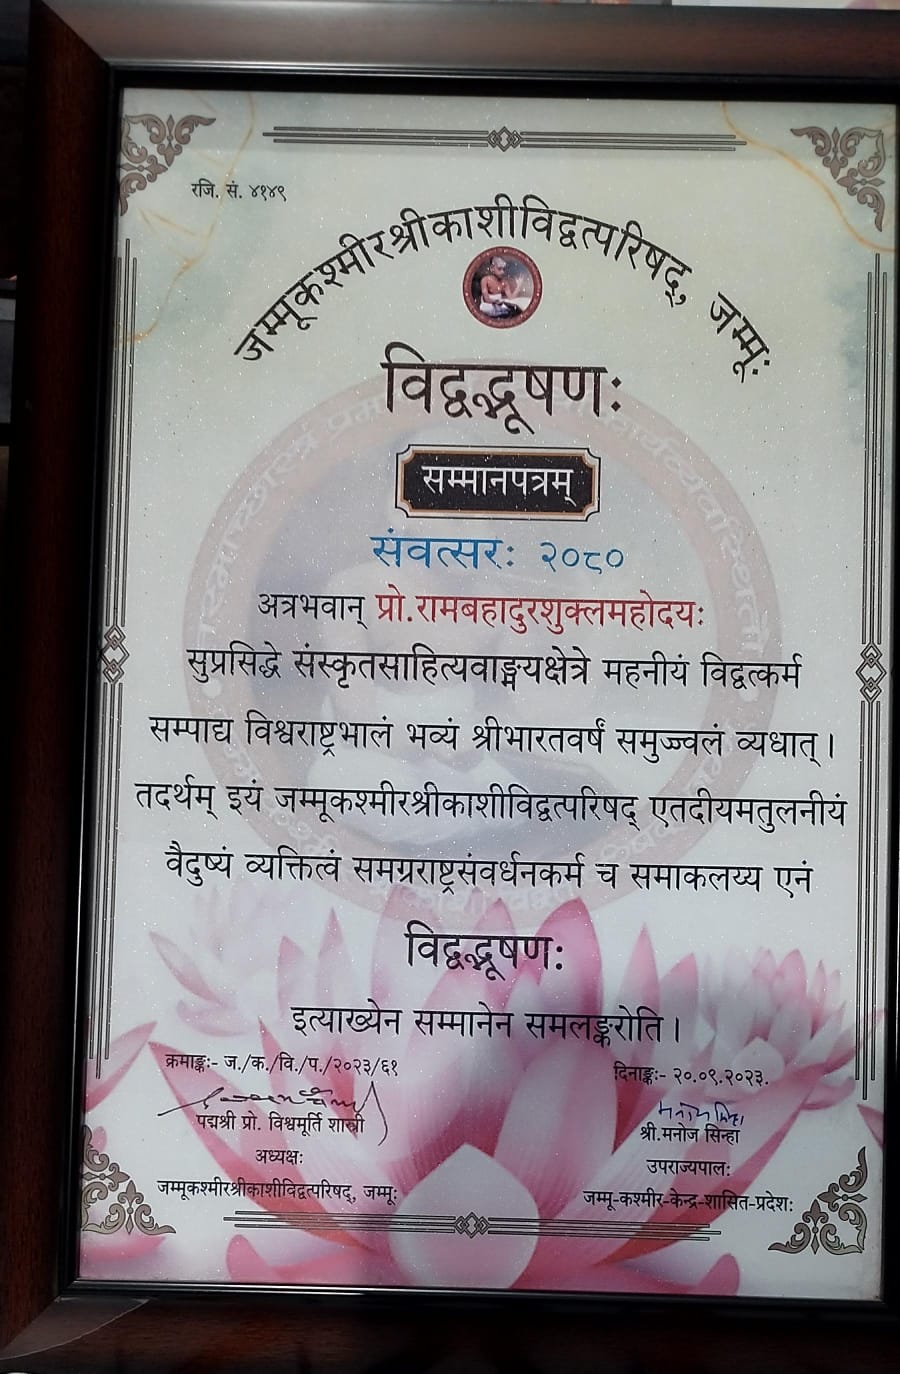 Vidwat Bushan Award